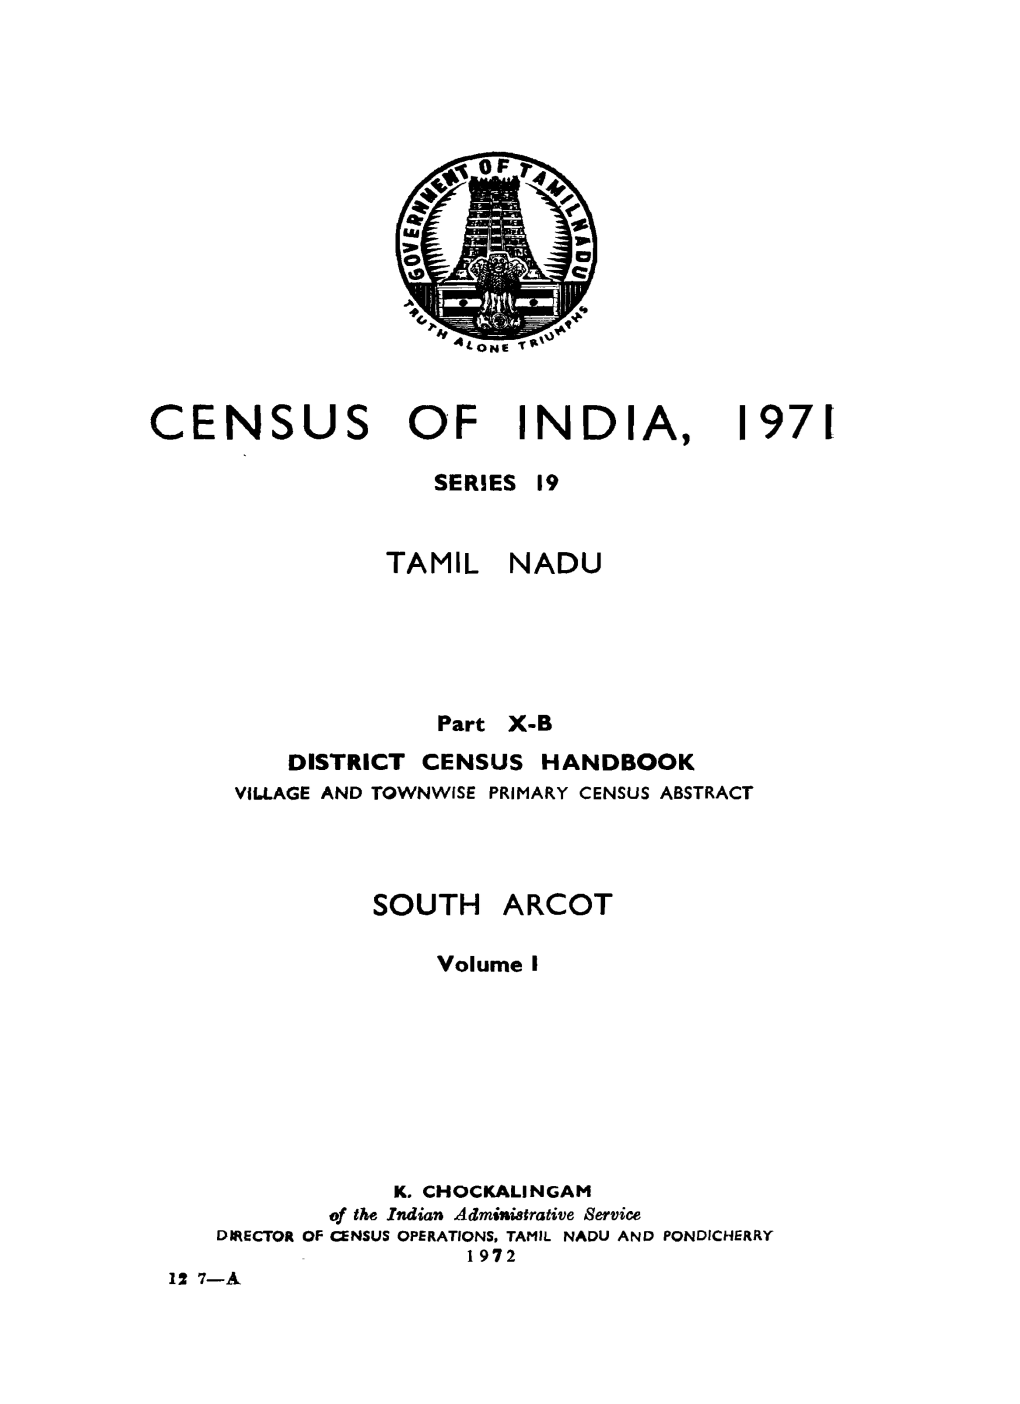 District Census Handbook, South Arcot, Part X-B, Vol-I, Series-19